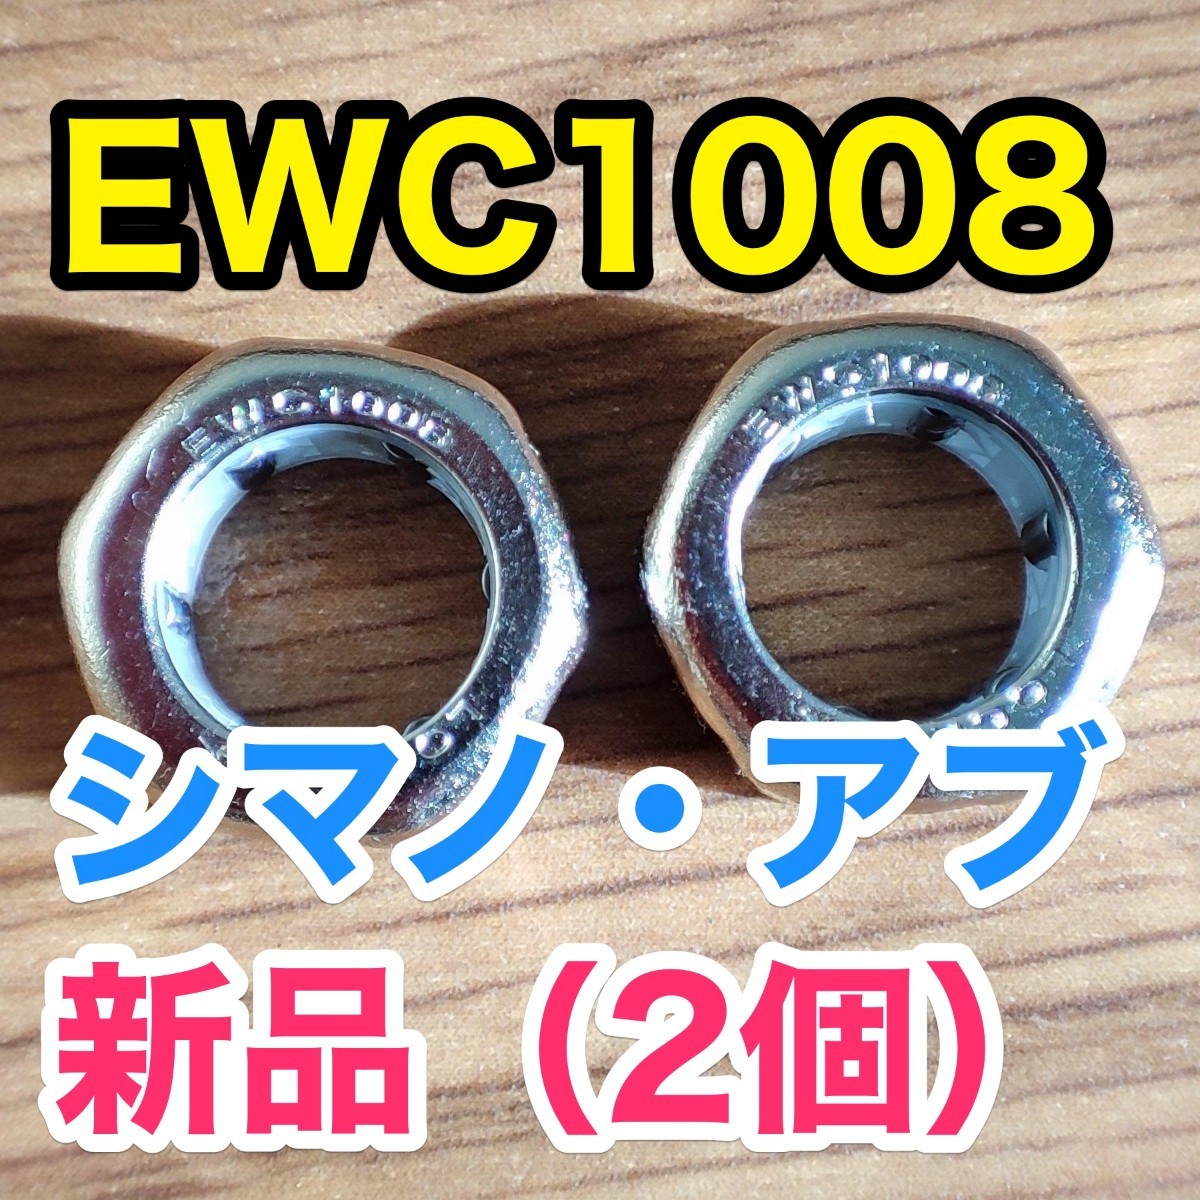 EWC1008【シマノ/アブ ワンウェイクラッチ/ローラークラッチ】2個